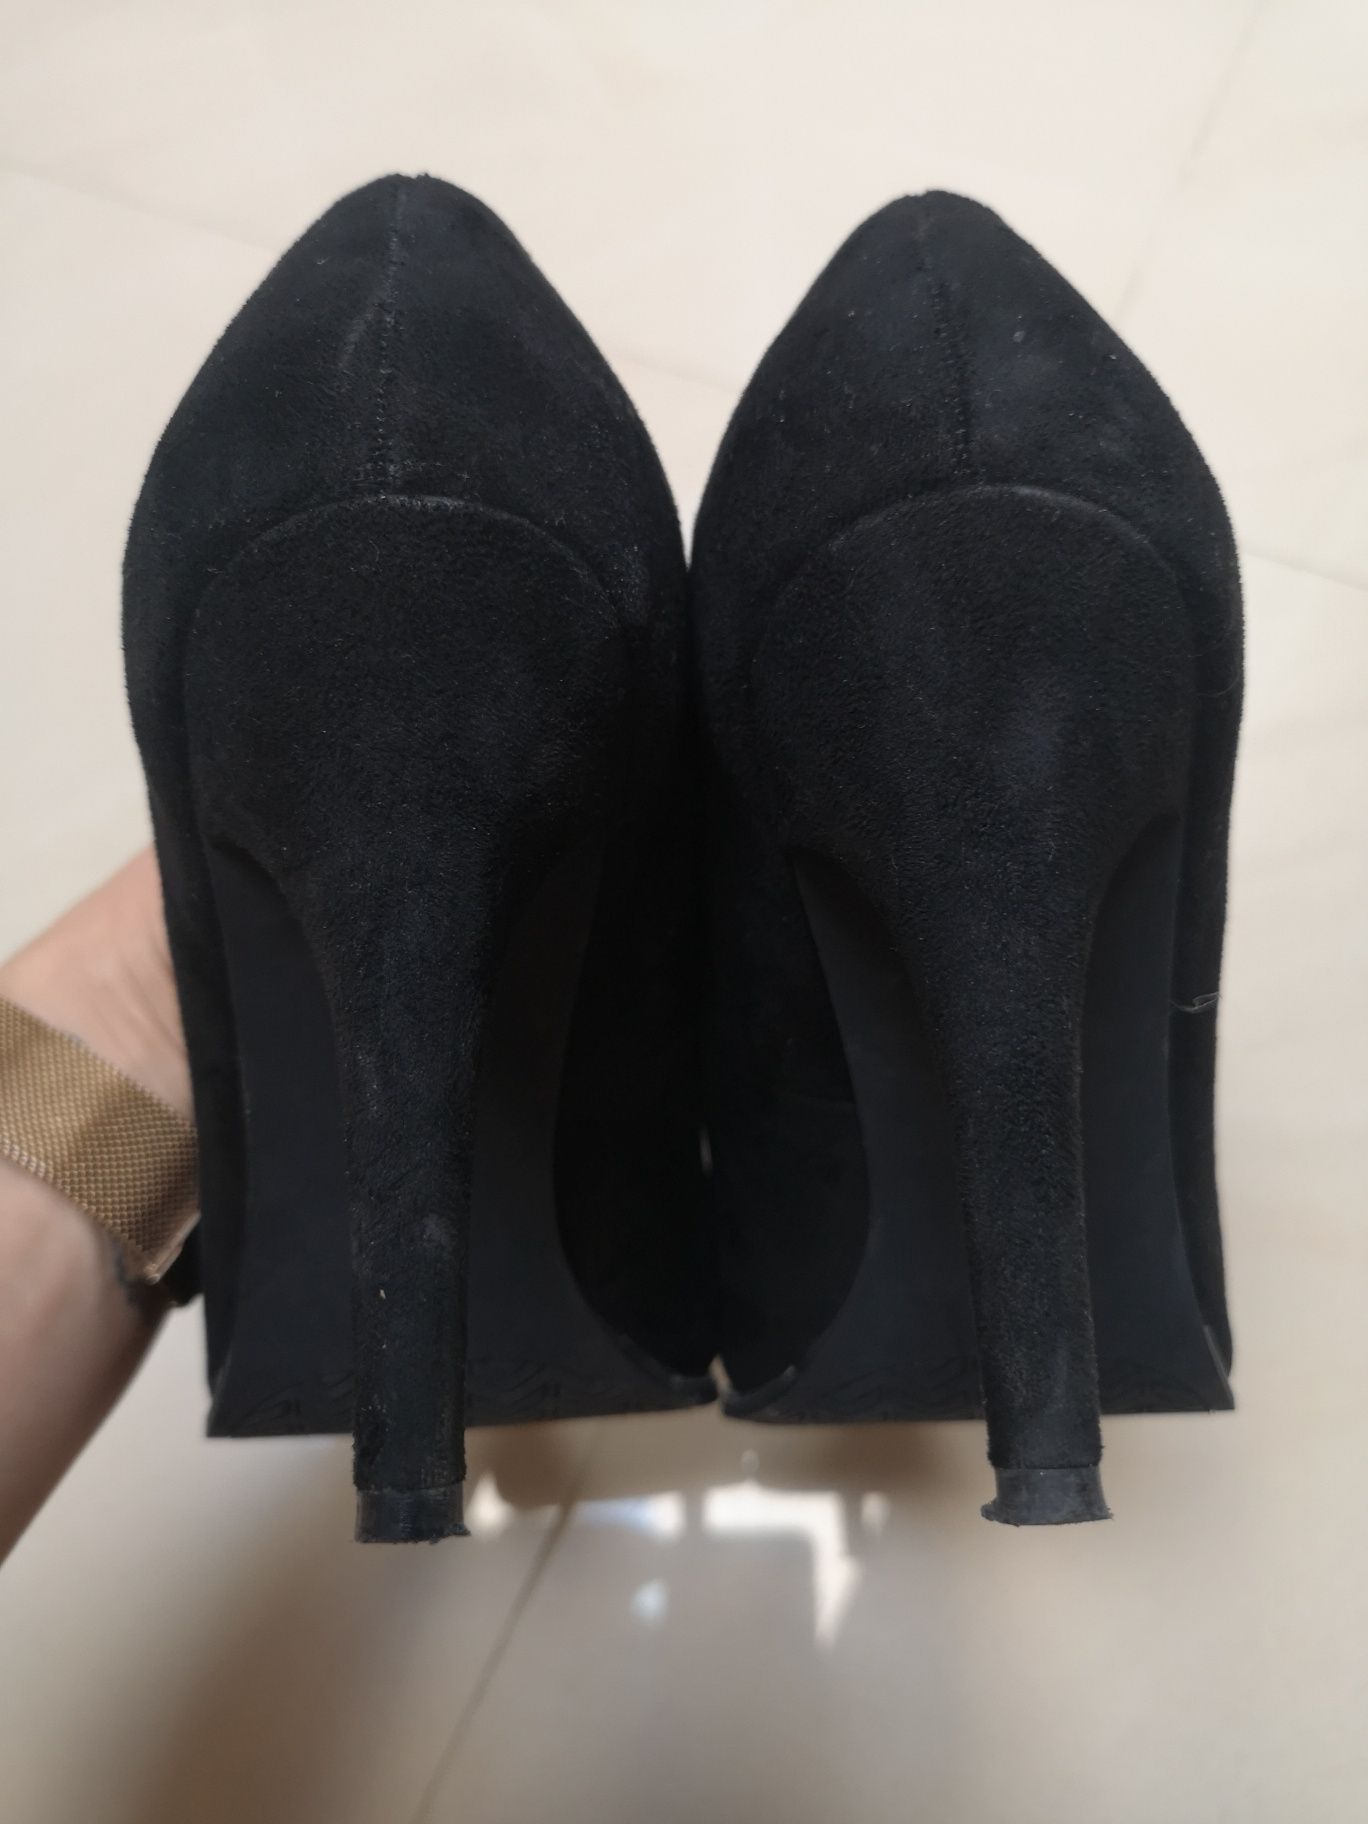 Szpilki czarne Graceland, buty, pantofle39